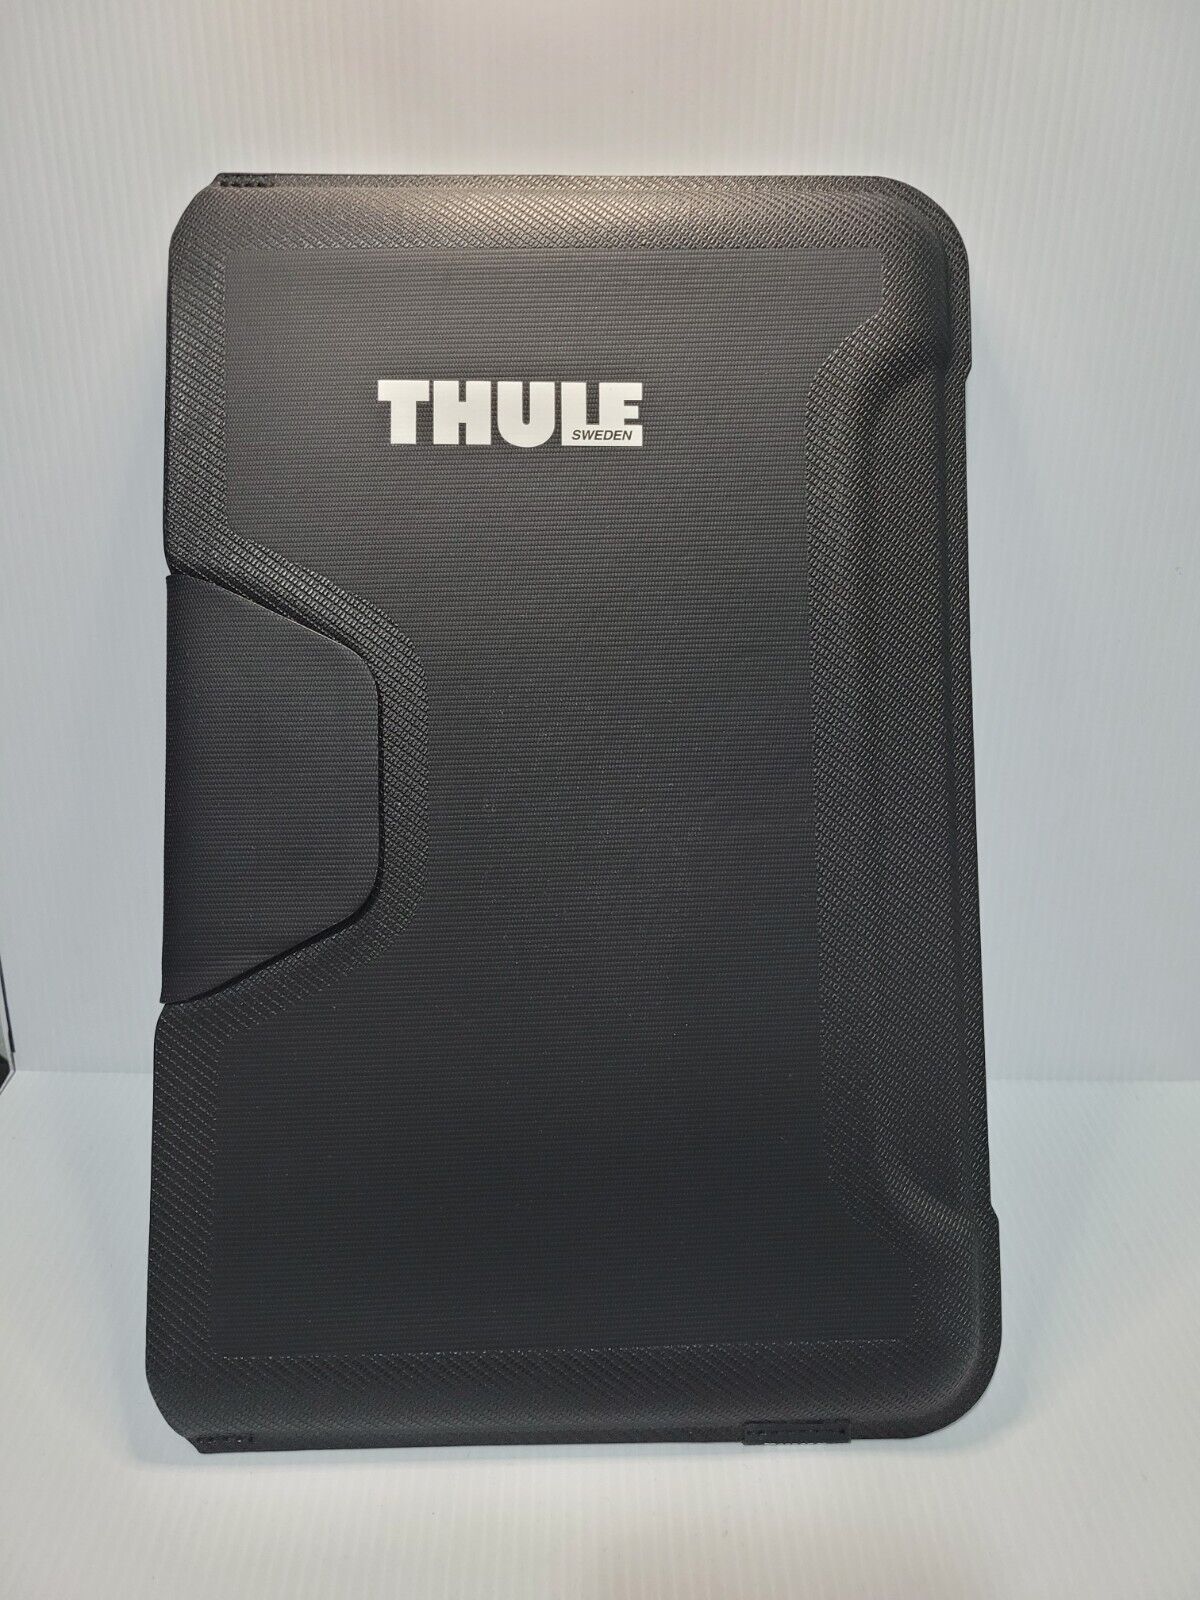 Thule Gauntlet 3.0 MacBook Air Envelope 3203099 Black New Without Tag TGEE-2250